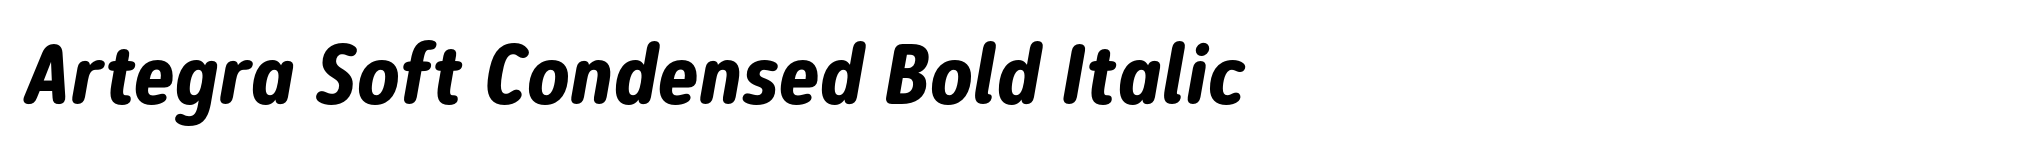 Artegra Soft Condensed Bold Italic image